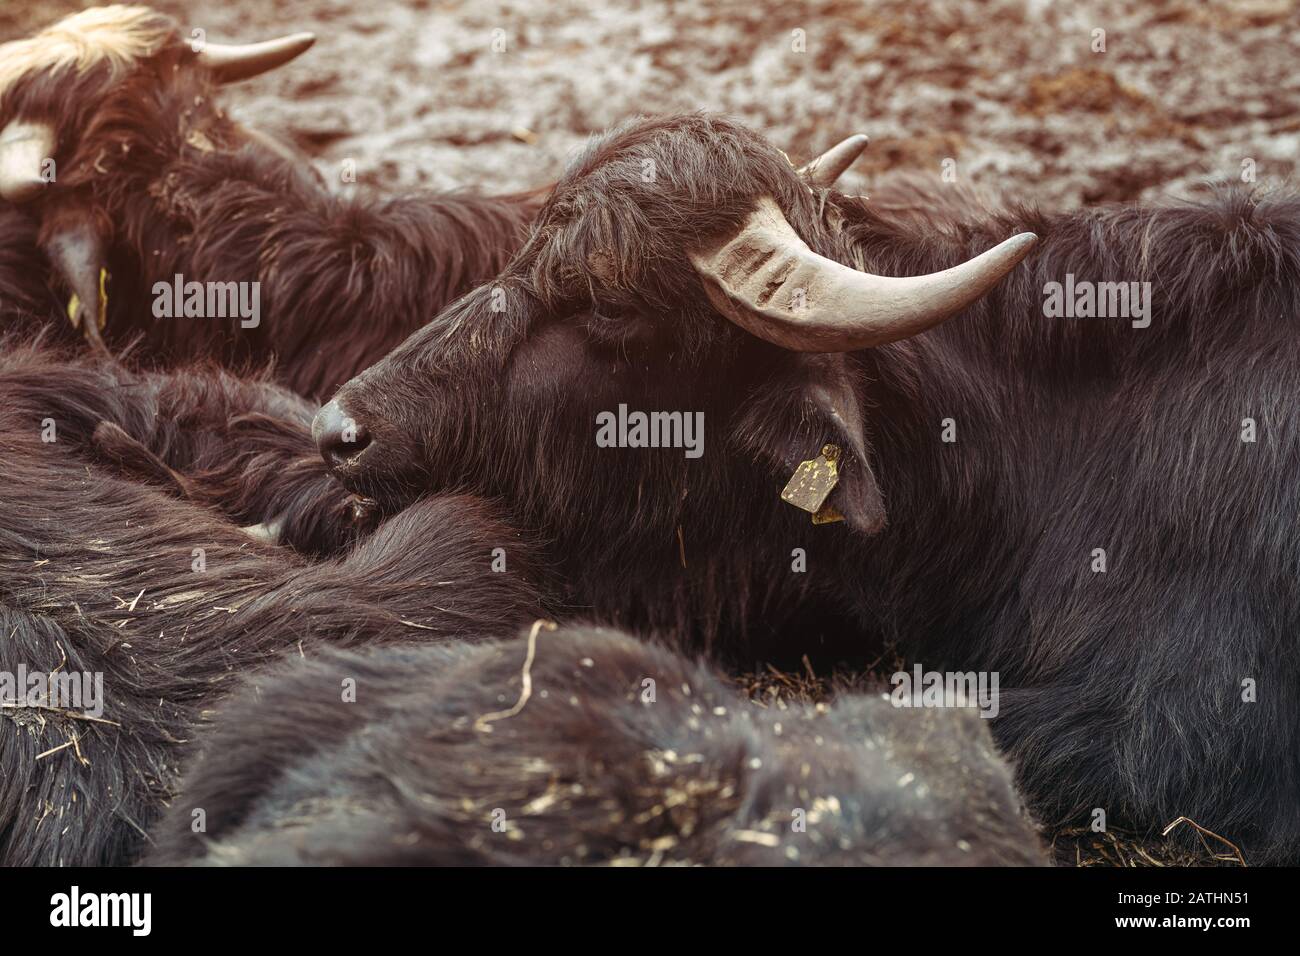 Domestic water buffalo in farm paddock, livestock animal husbandry Stock Photo